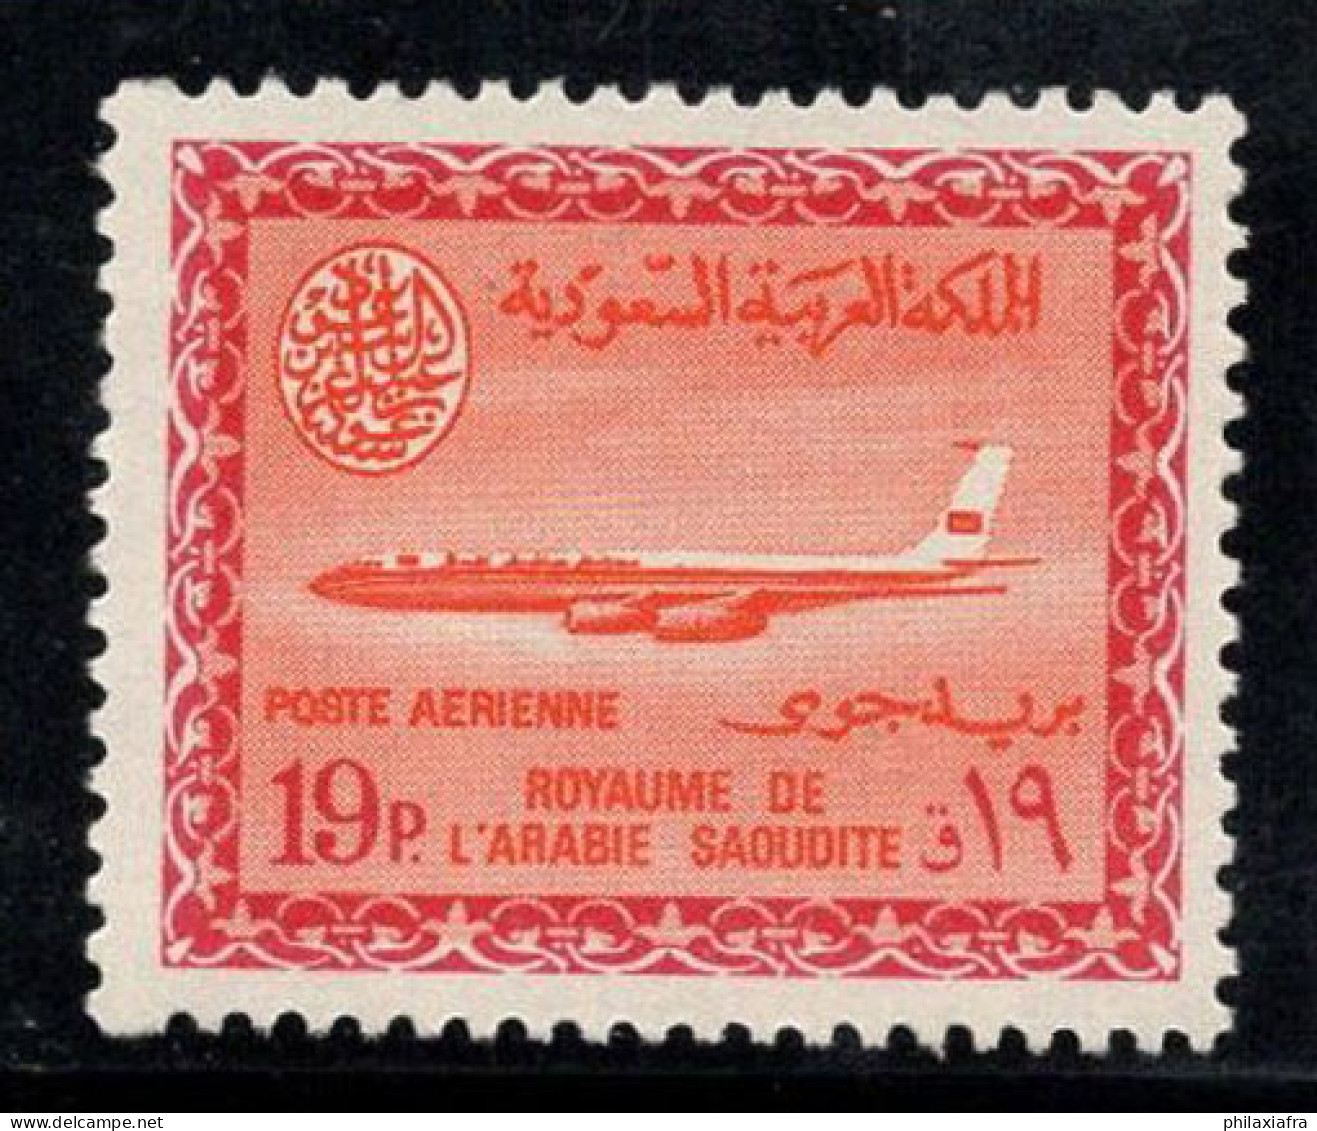 Arabie Saoudite 1965-72 Mi. 259 Neuf ** 100% Poste Aérienne 19 Pia, Boeing 720 B - Arabie Saoudite